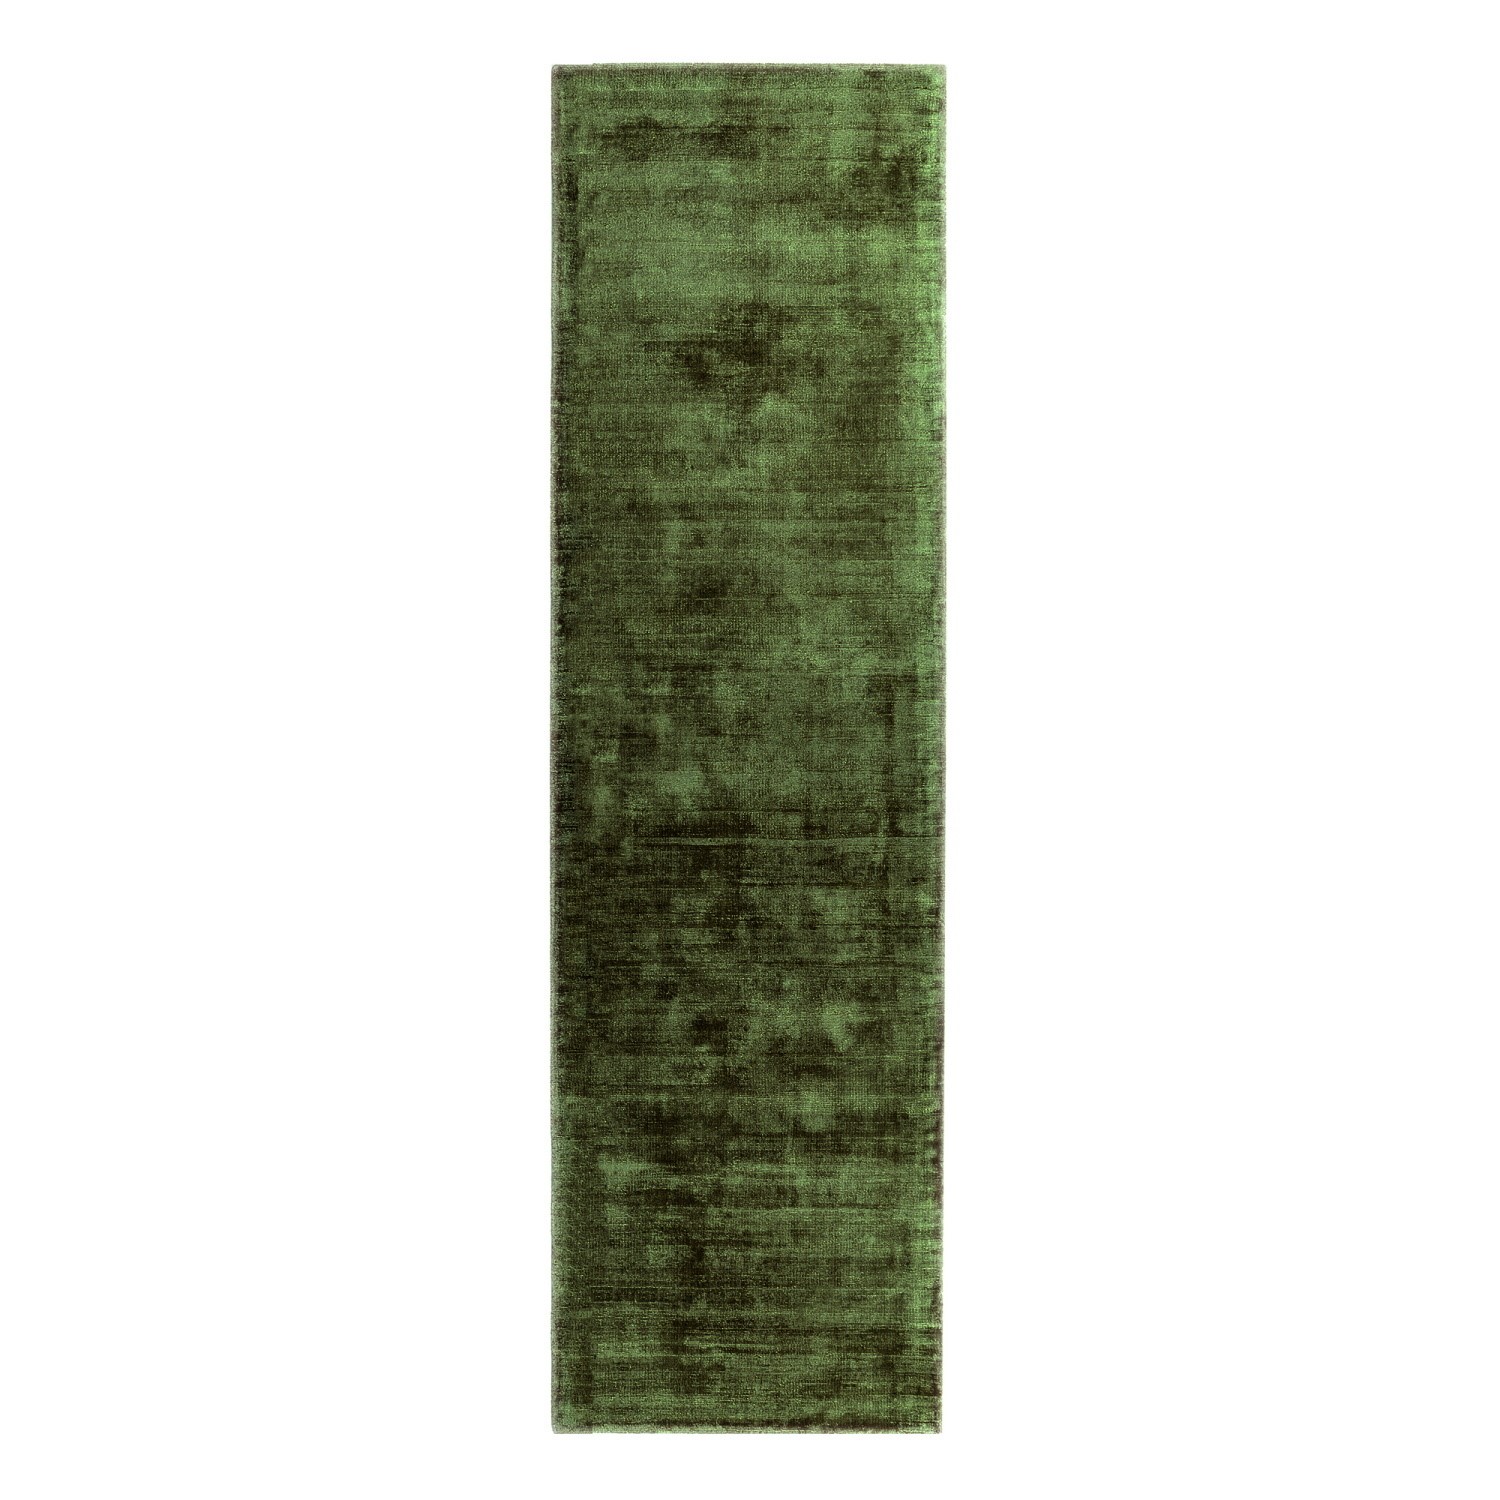 Photo of Green runner rug - 66 x 240 cm - blade